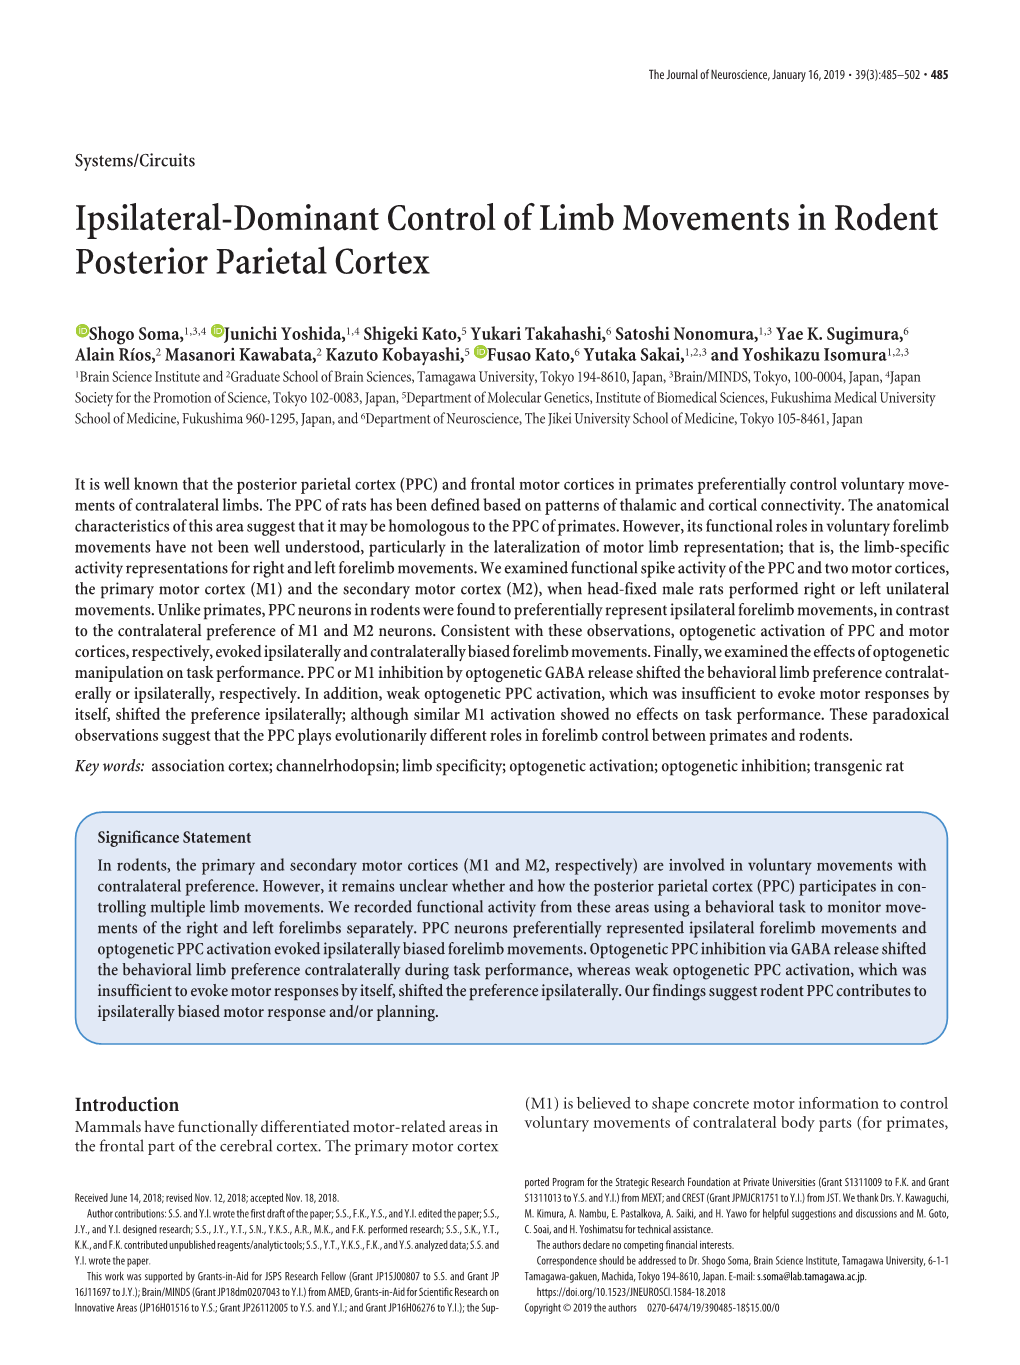 Ipsilateral-Dominant Control of Limb Movements in Rodent Posterior Parietal Cortex